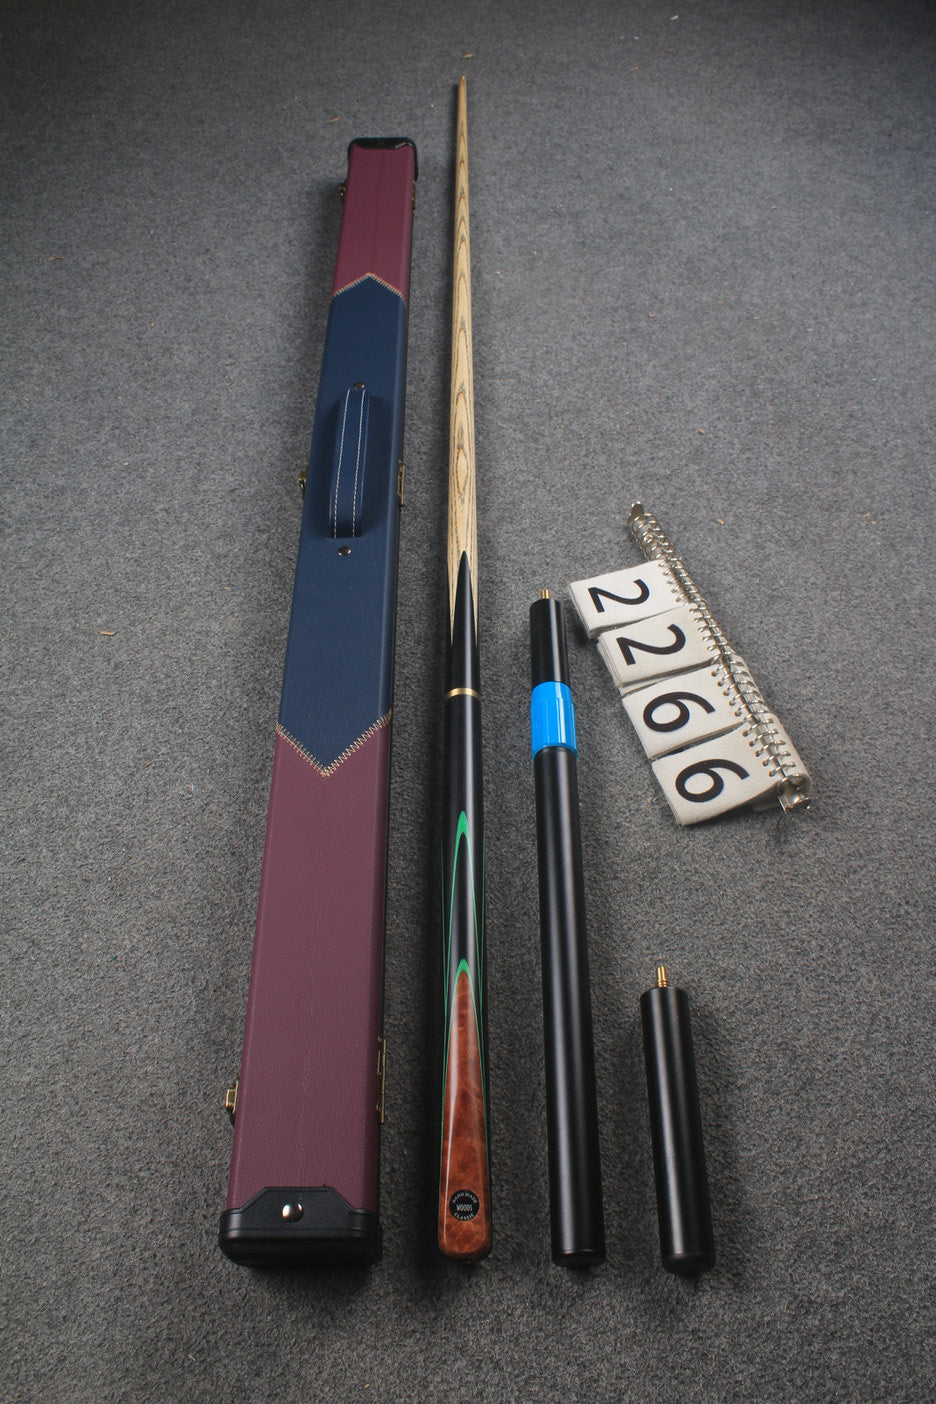 3/4 handmade ash snooker / pool cue # 2266